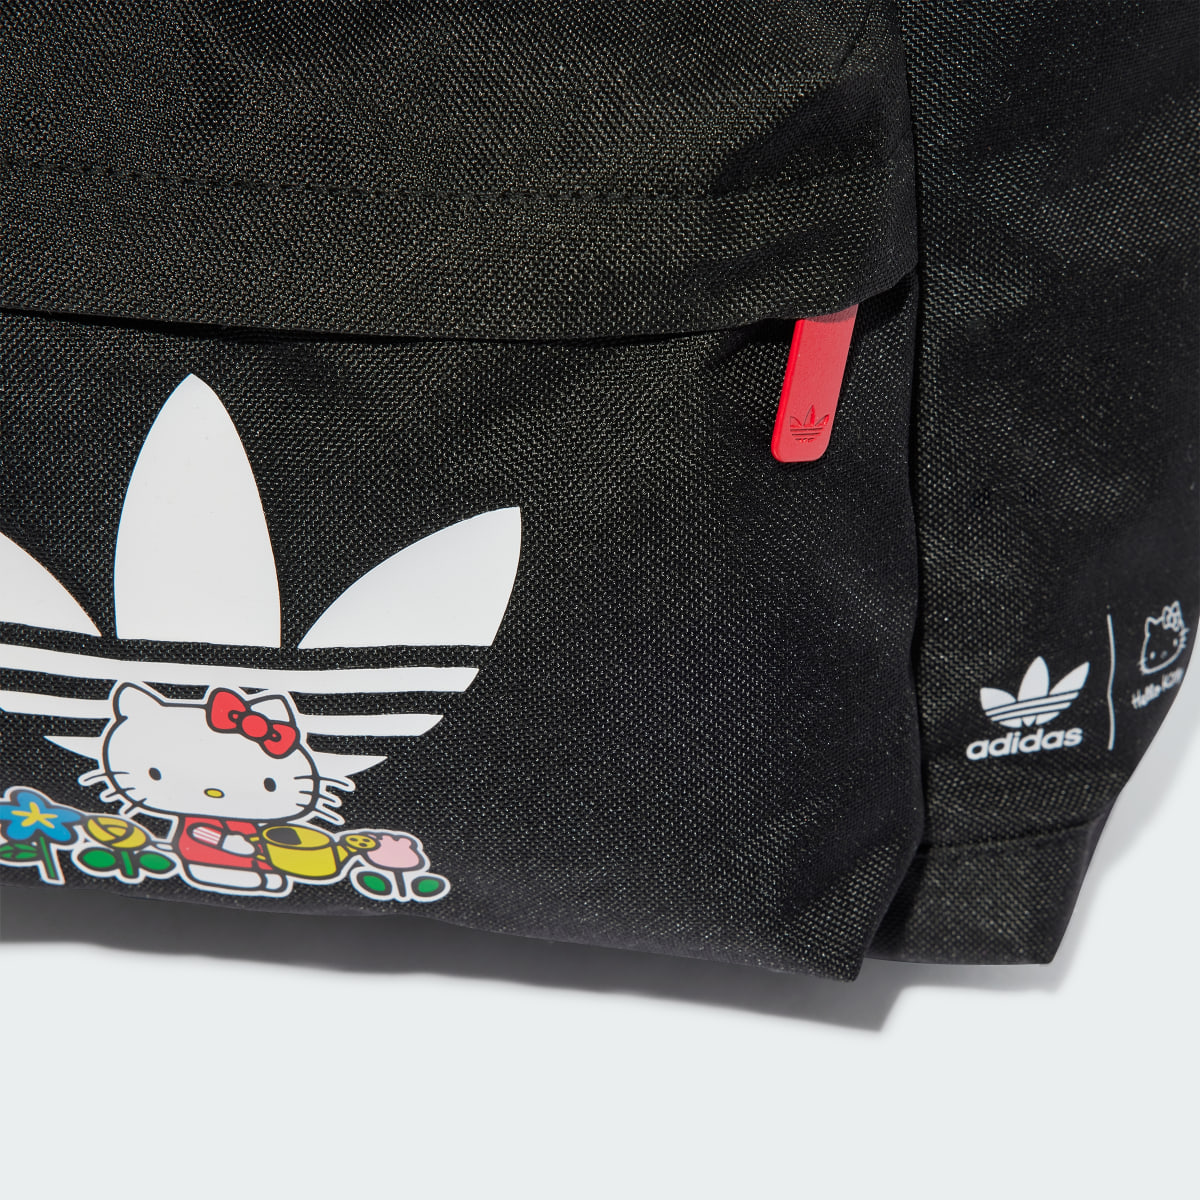 Adidas x Hello Kitty Backpack Kids. 7